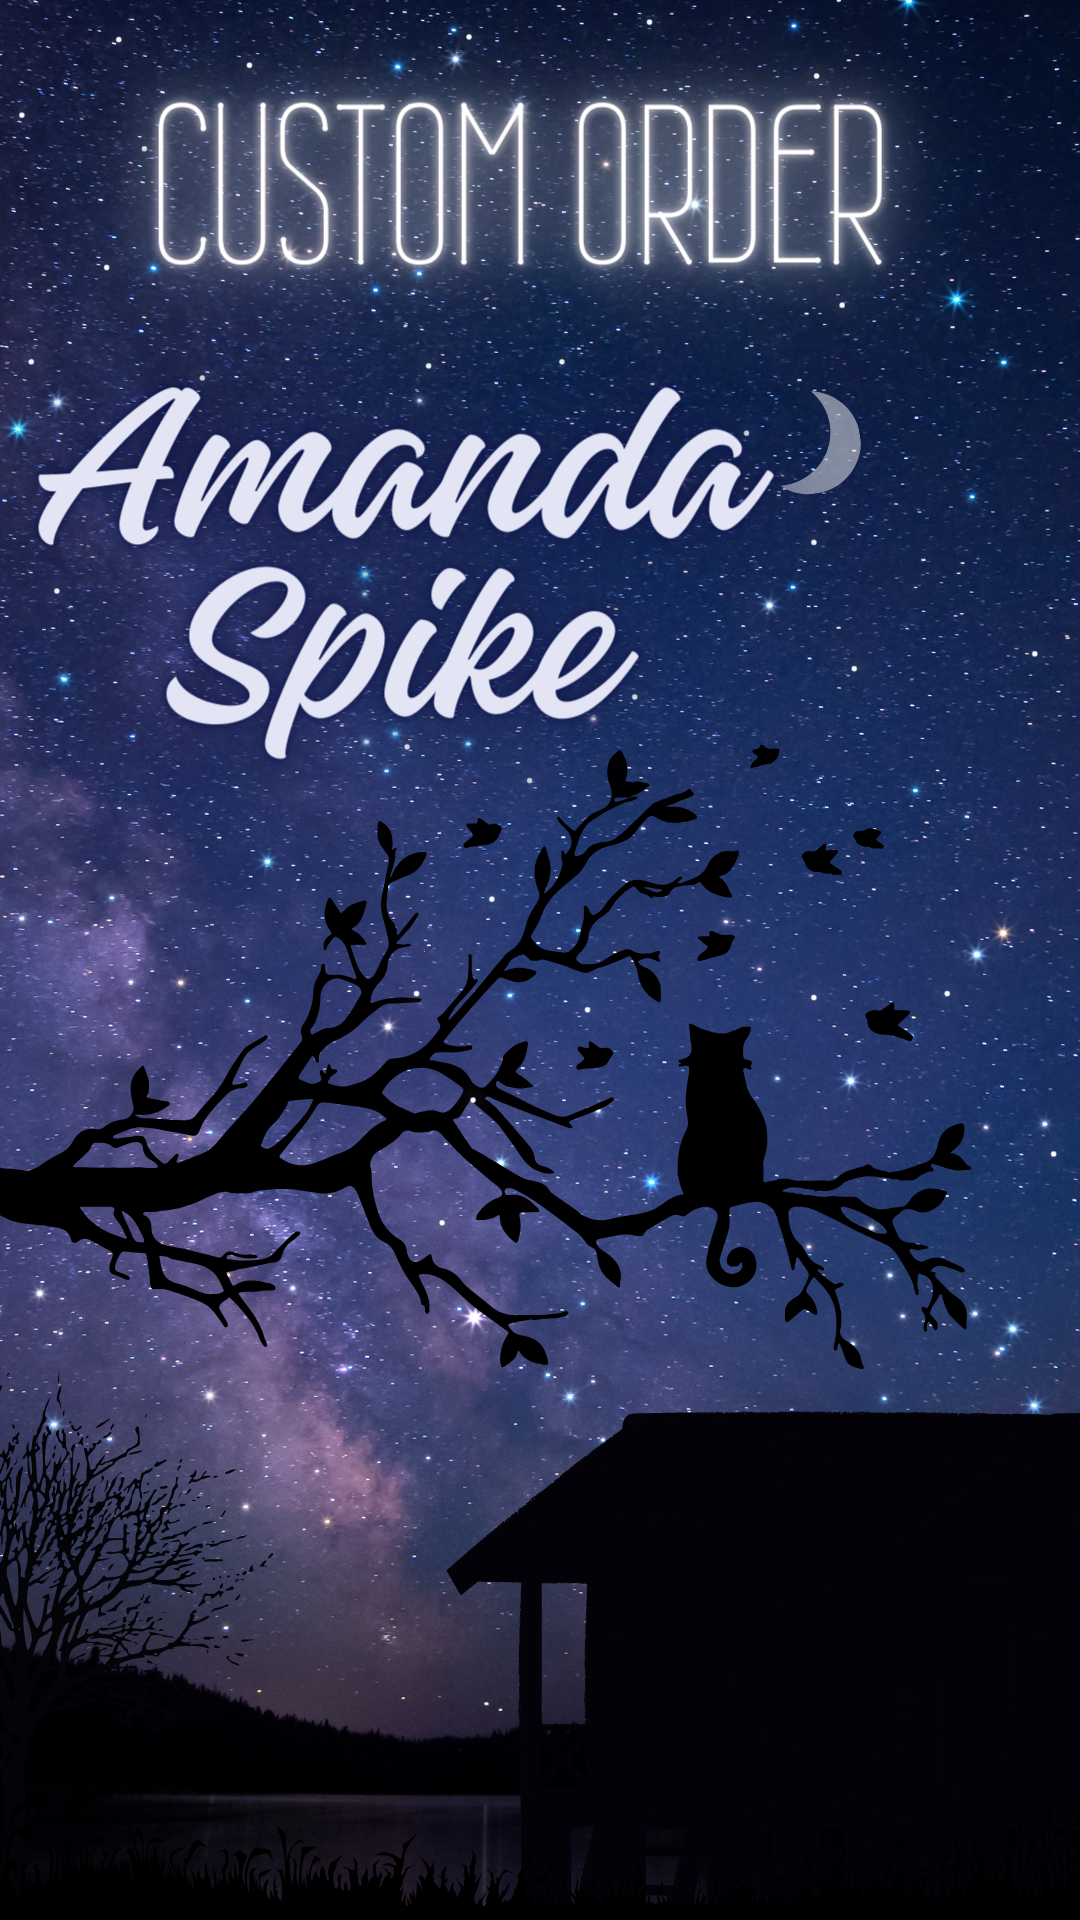 Custom Order for Amanda Spike